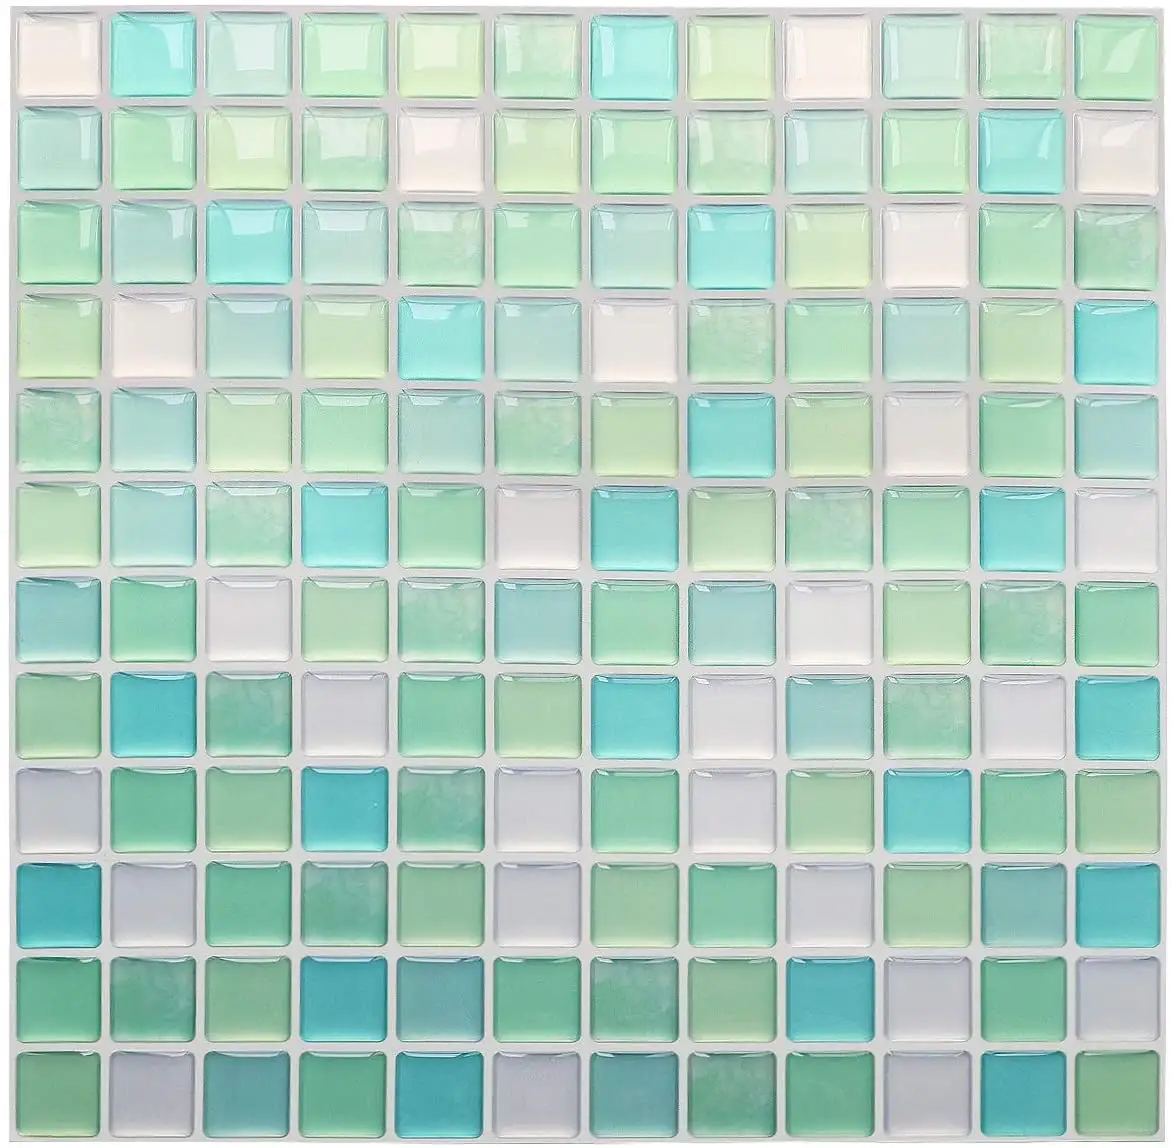 Hot Selling Removable Backsplash 3D Self Adhesive Wall Tiles Decoration Bathroom Mosaic PU DIY Waterproof